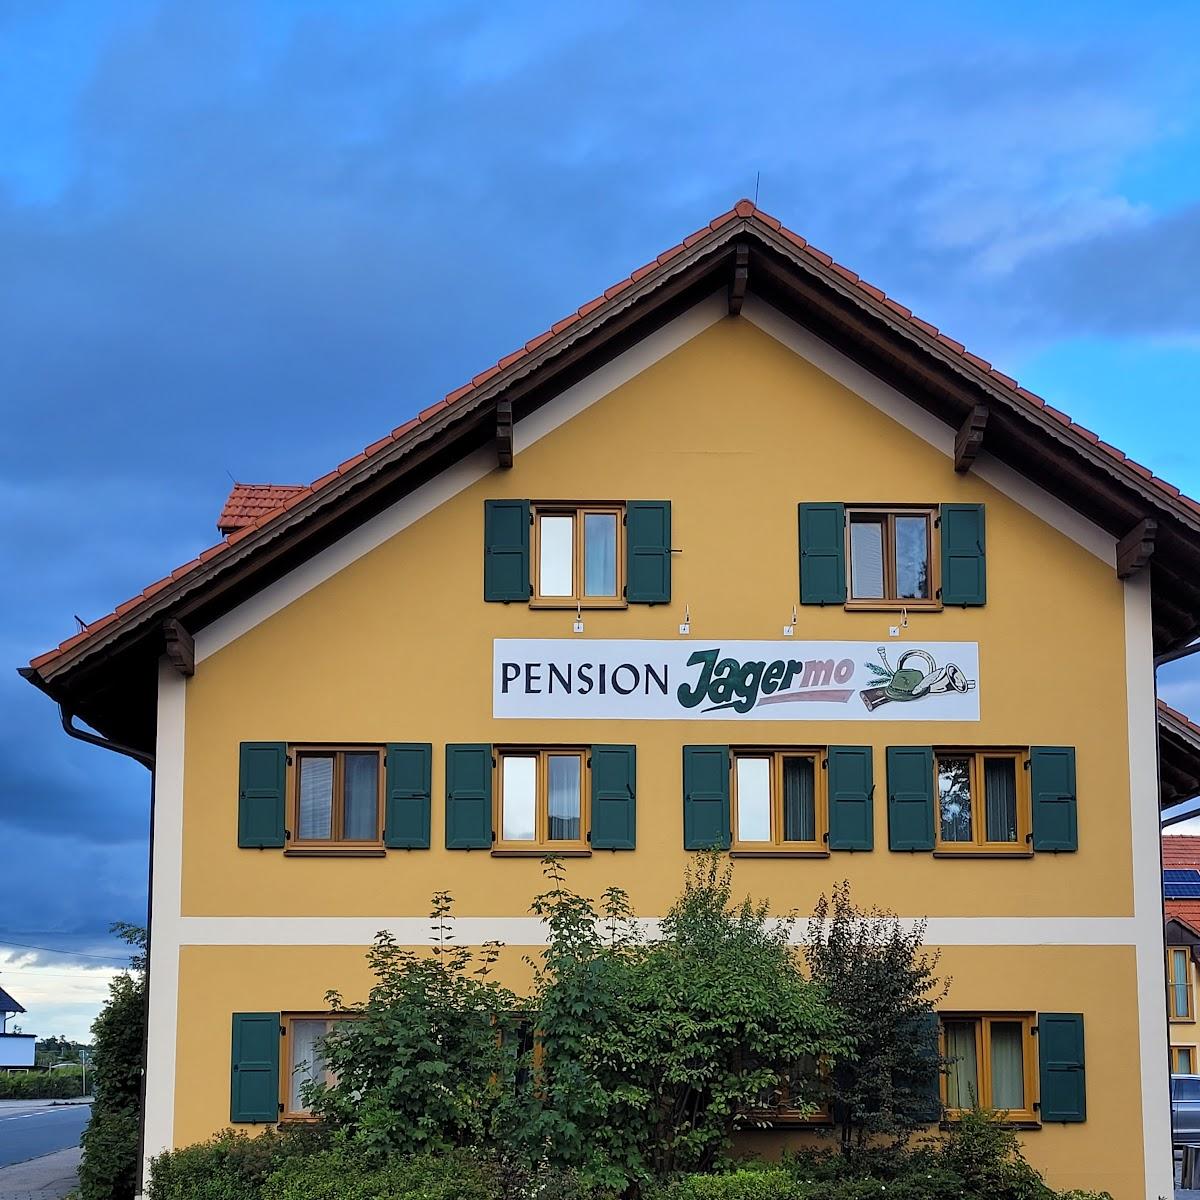 Restaurant "Jagermo Hotel garni" in Grasbrunn